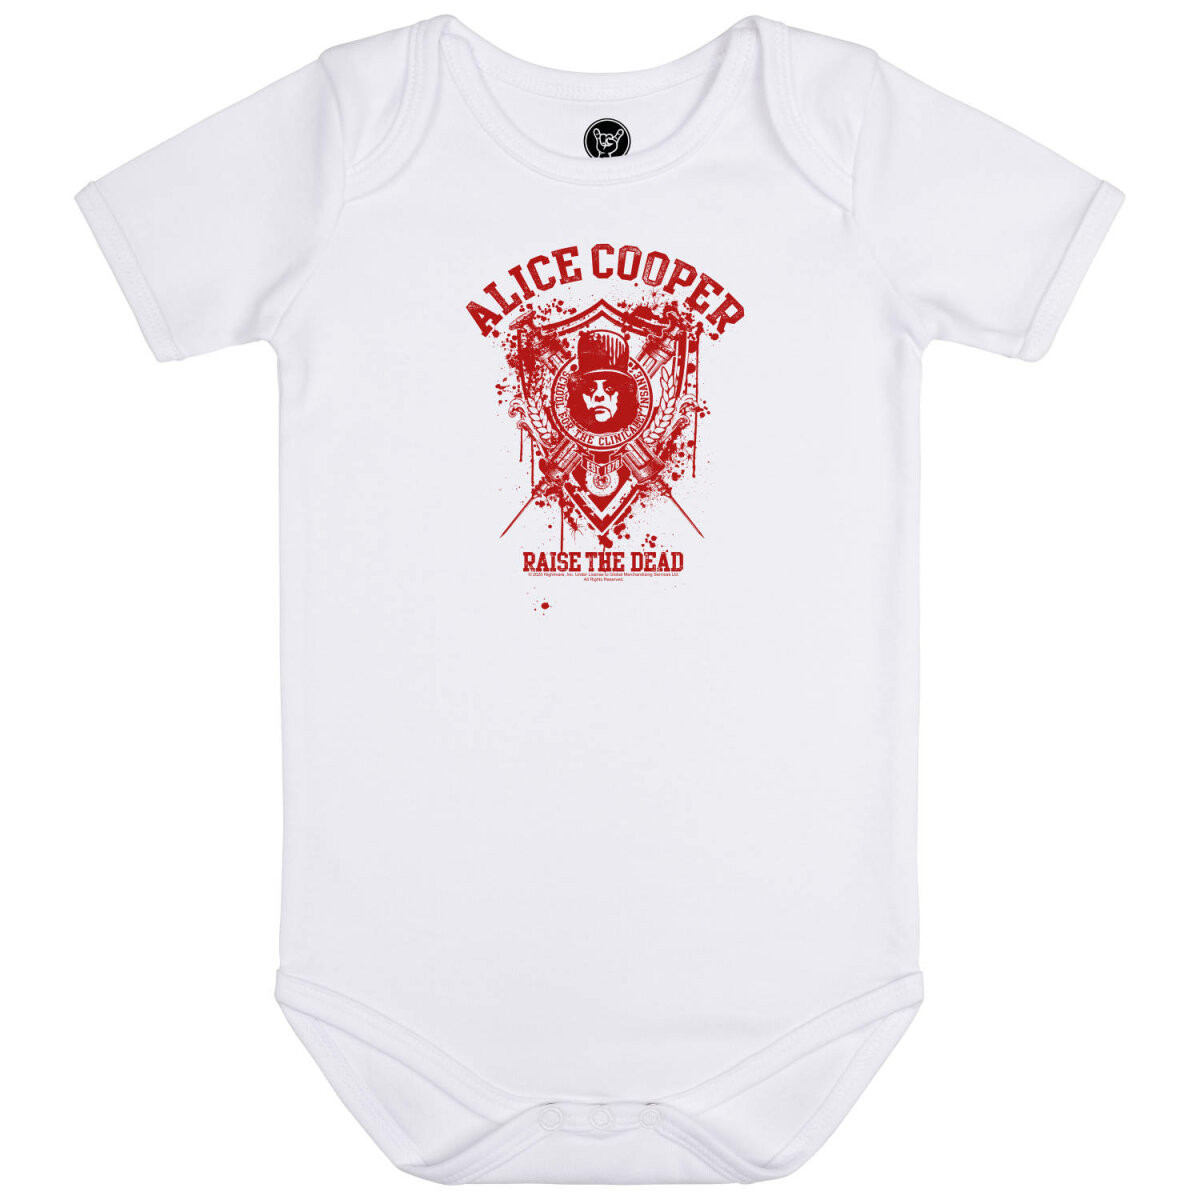 Alice Cooper Baby Bodysuit White - (Raise the Dead Red) 